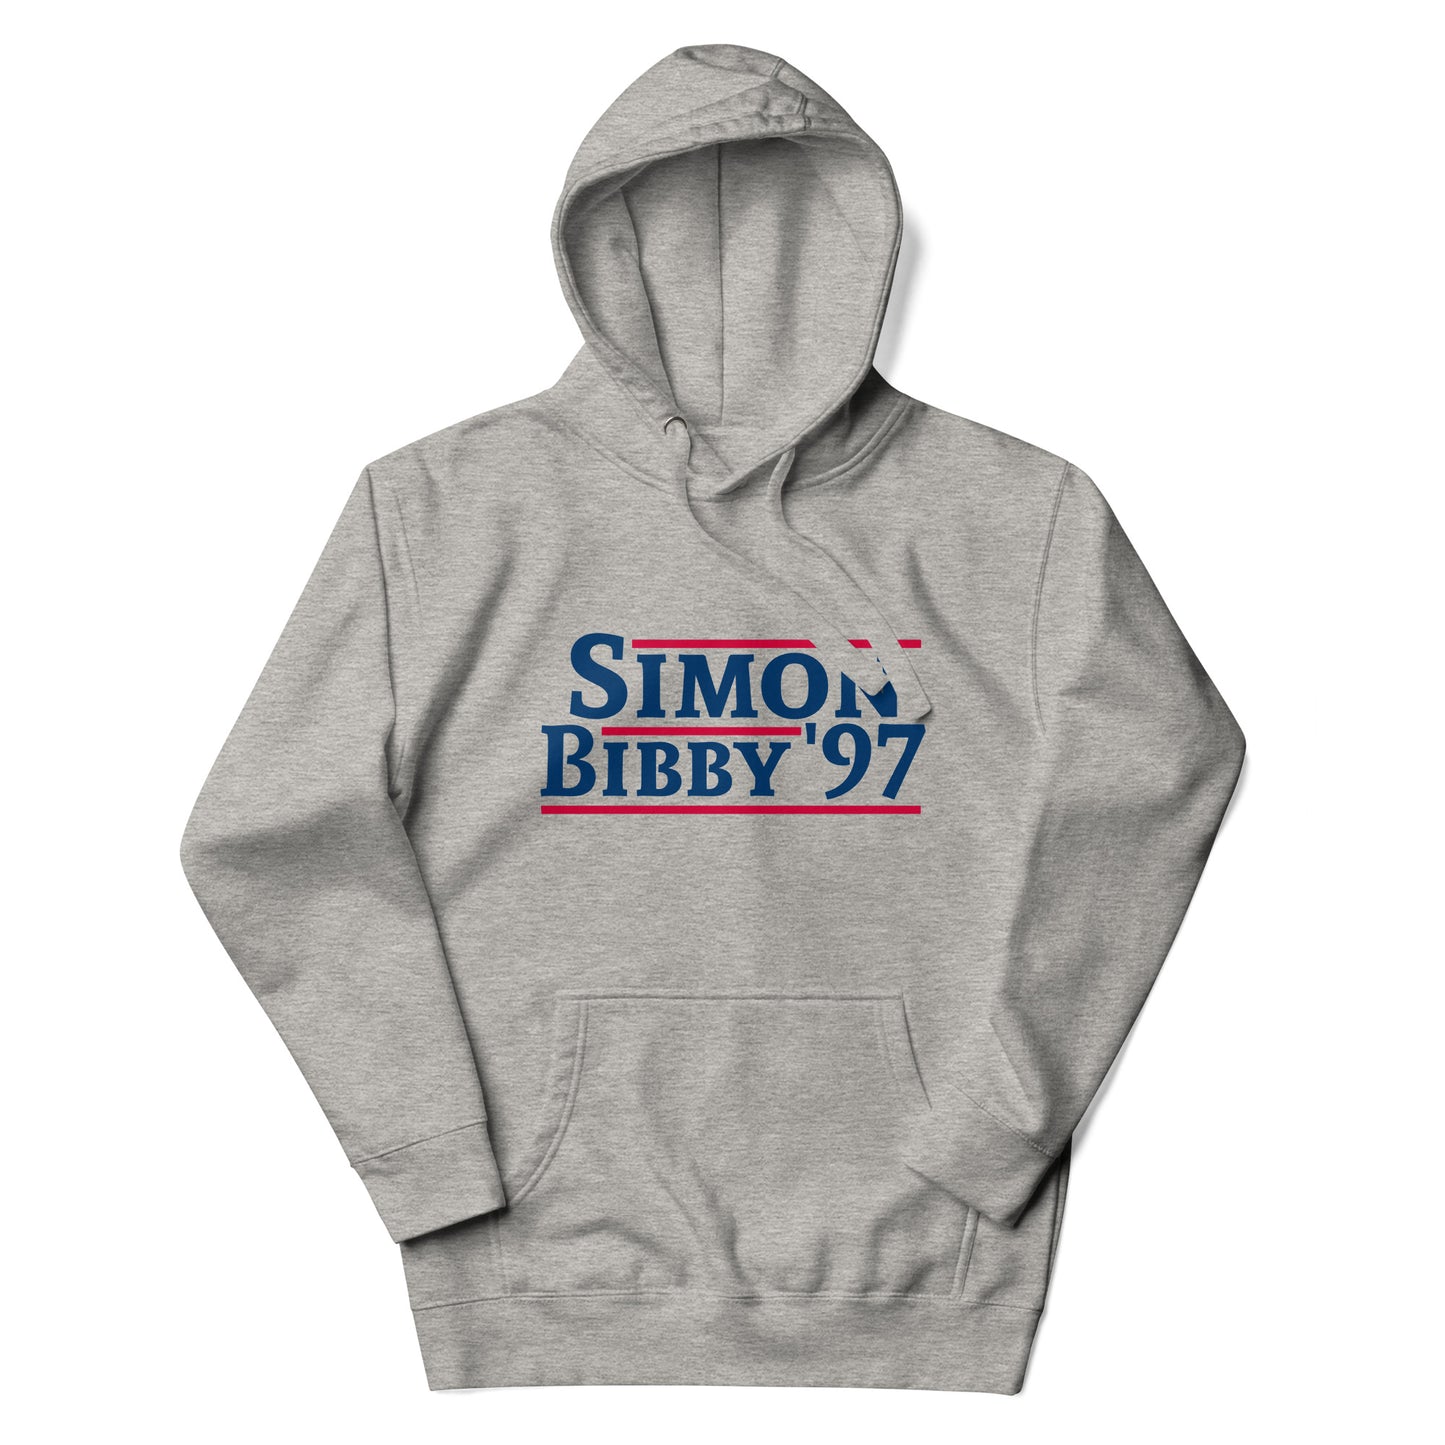 Simon/Bibby '97 - Unisex Hoodie